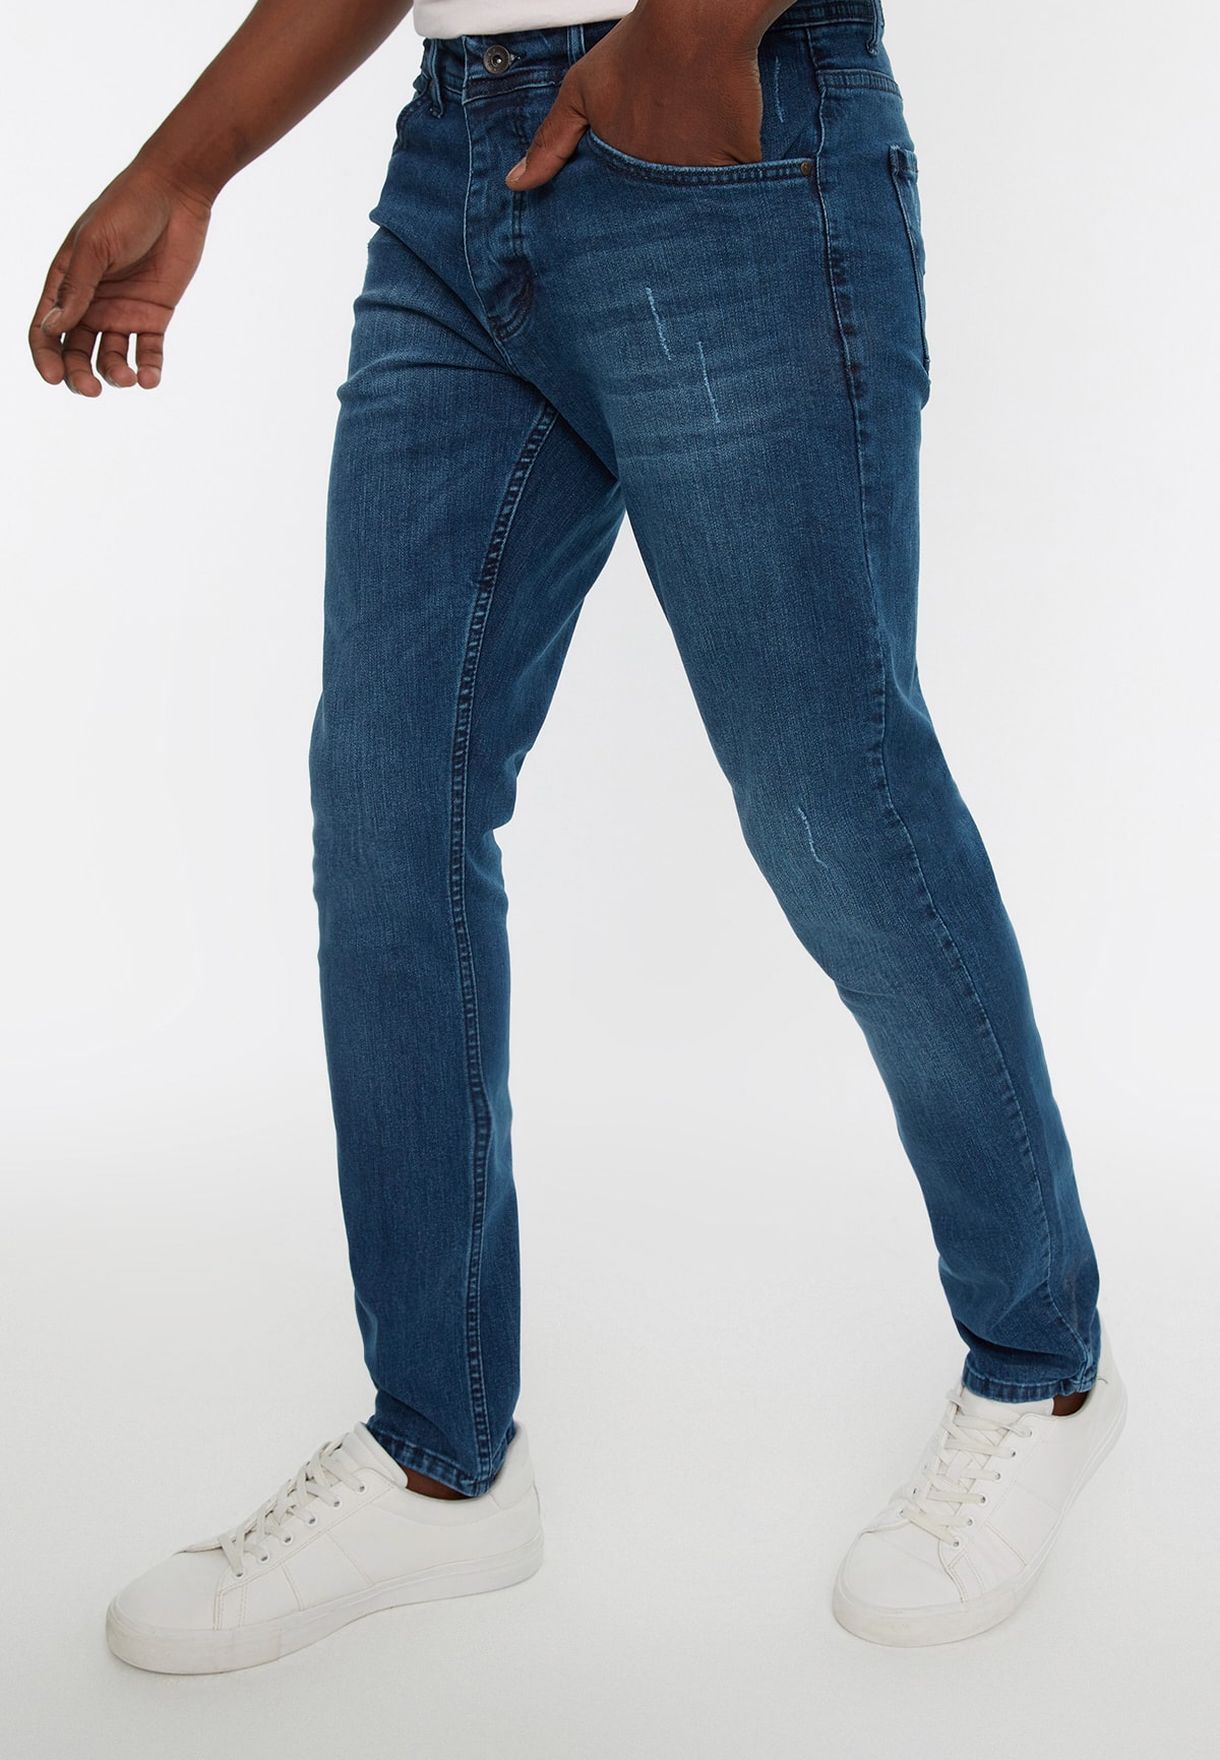 Distressed Skinny Fit Jeans